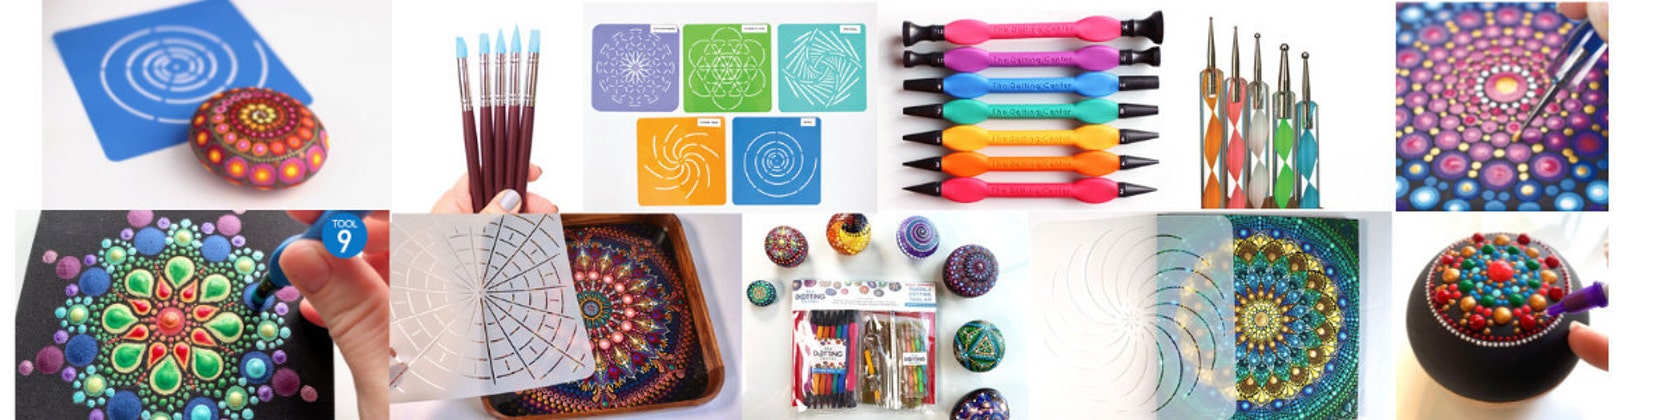 Dot Mandala Painting Kit - Dotting Tools and Stencils for Dot Mandala  Painting - The Dotting Center